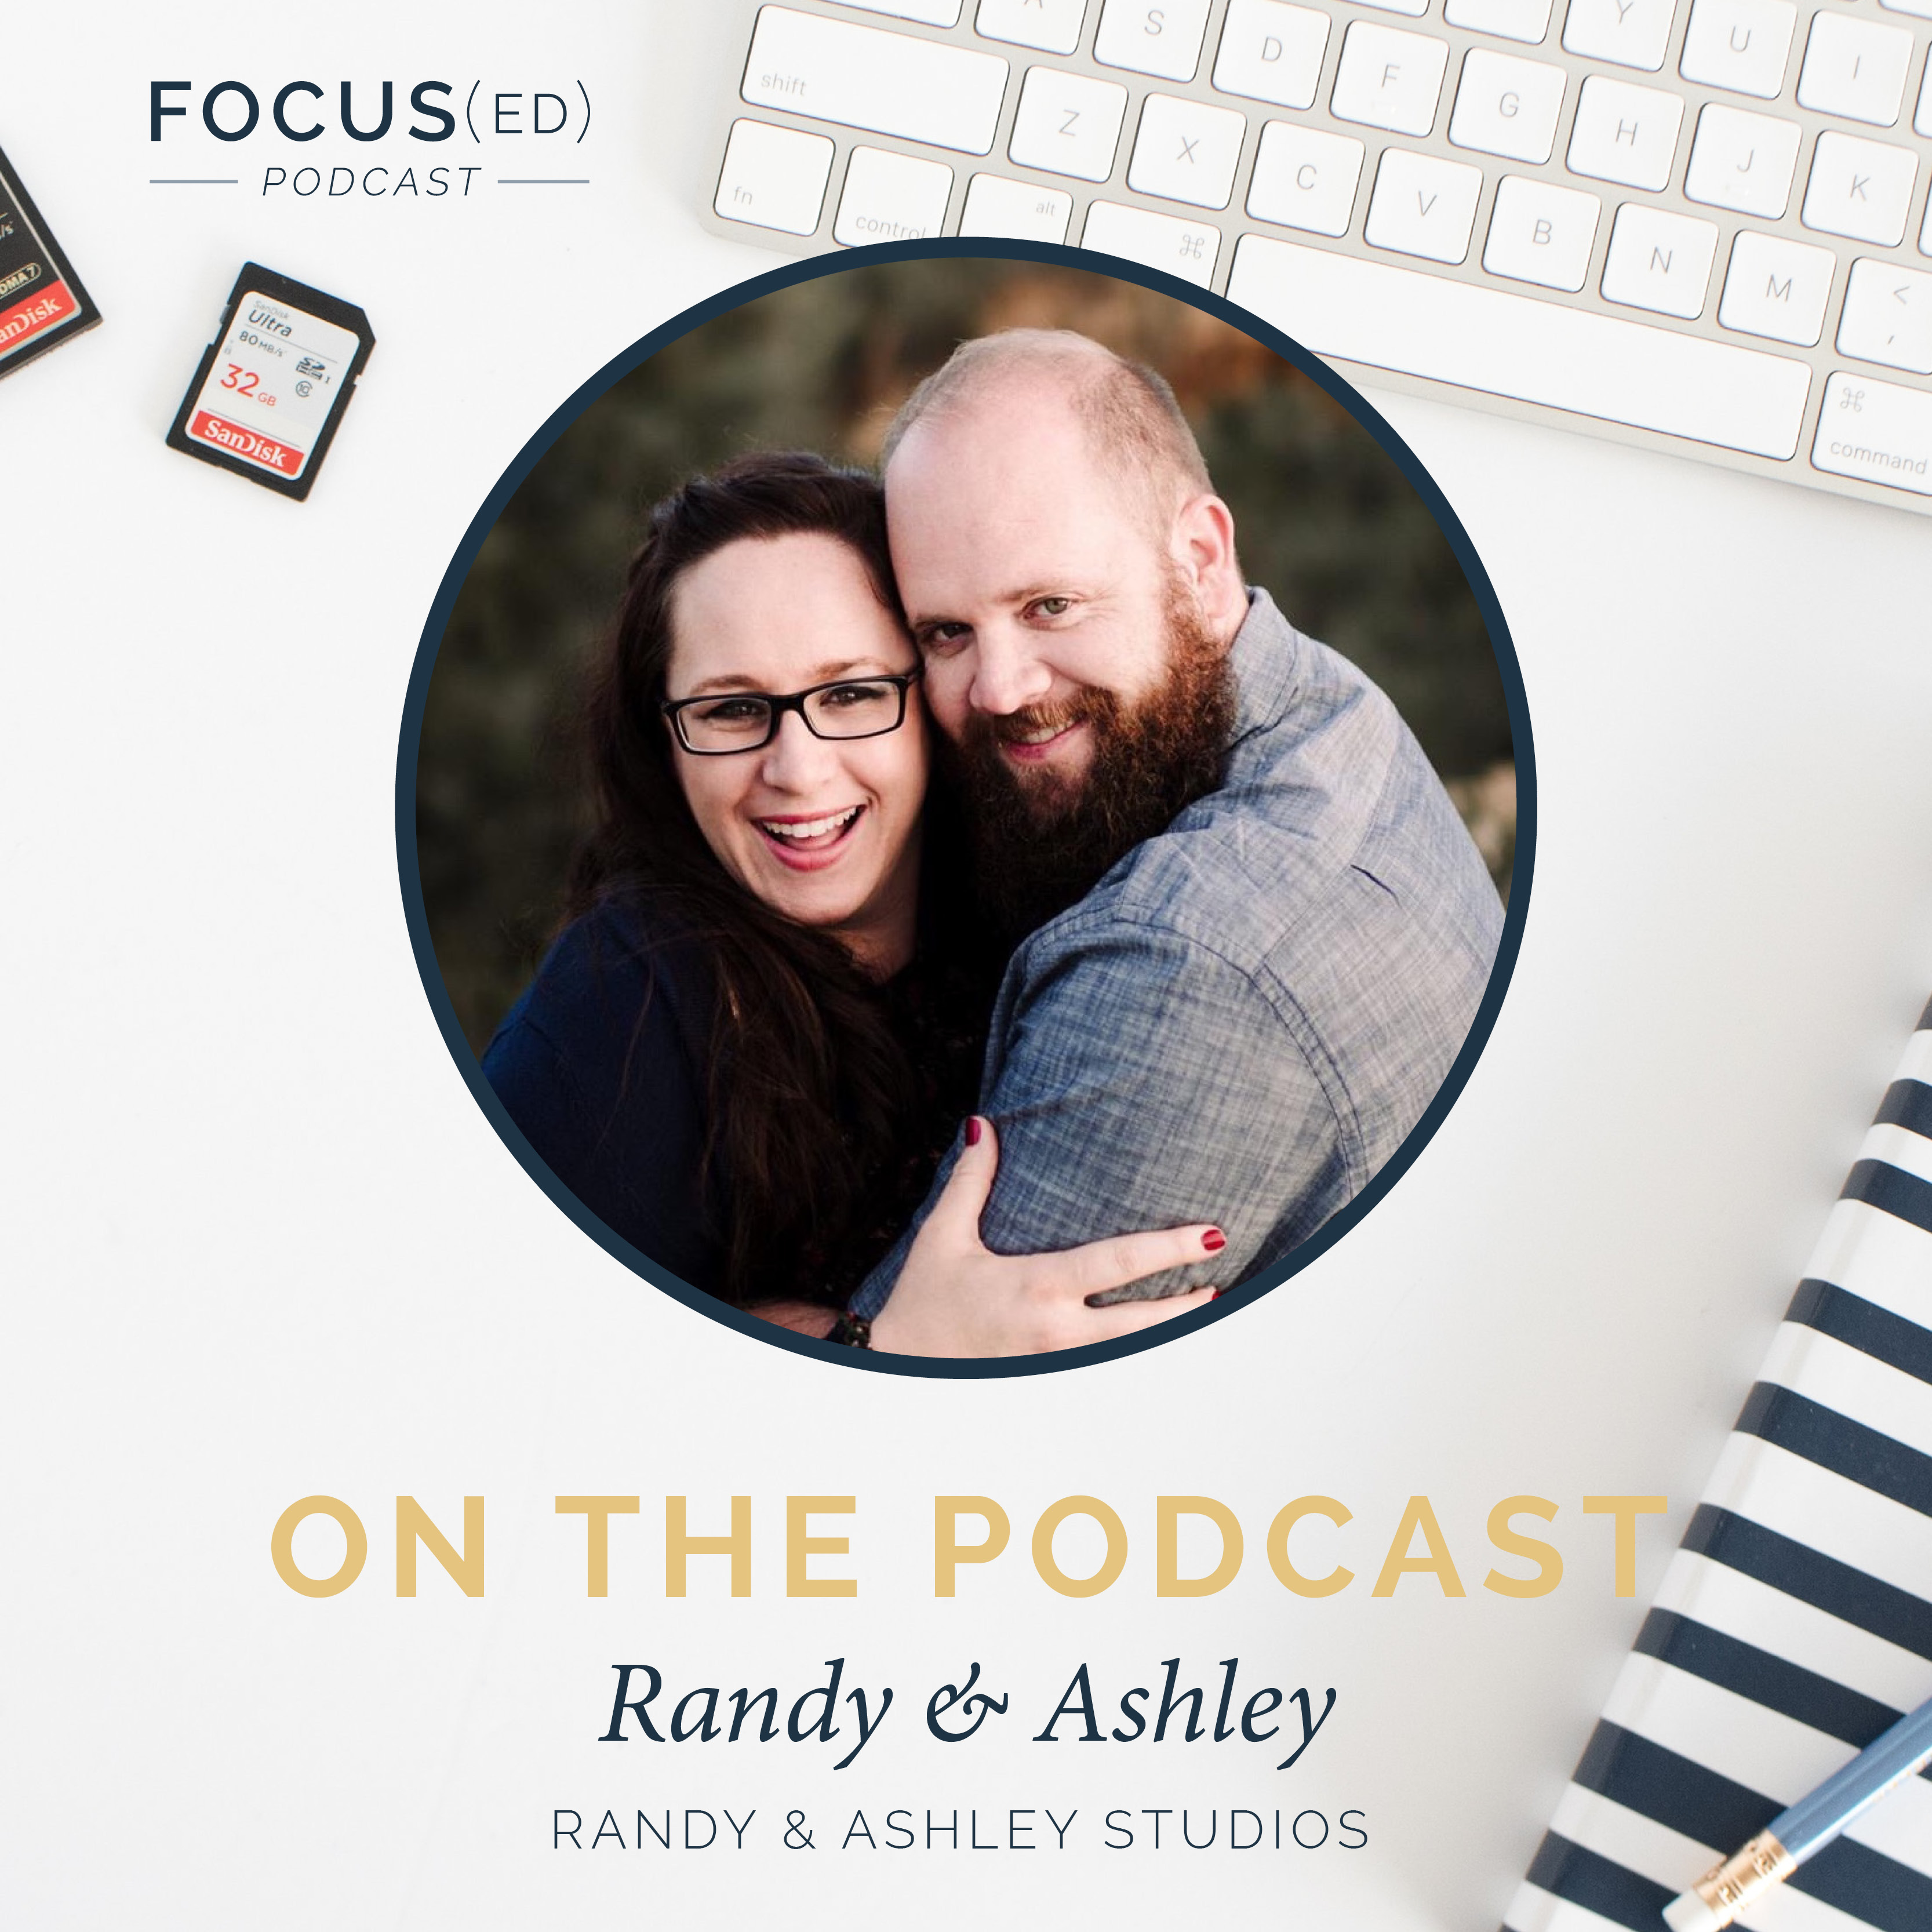 Randy + Ashley on the Focused Podcast